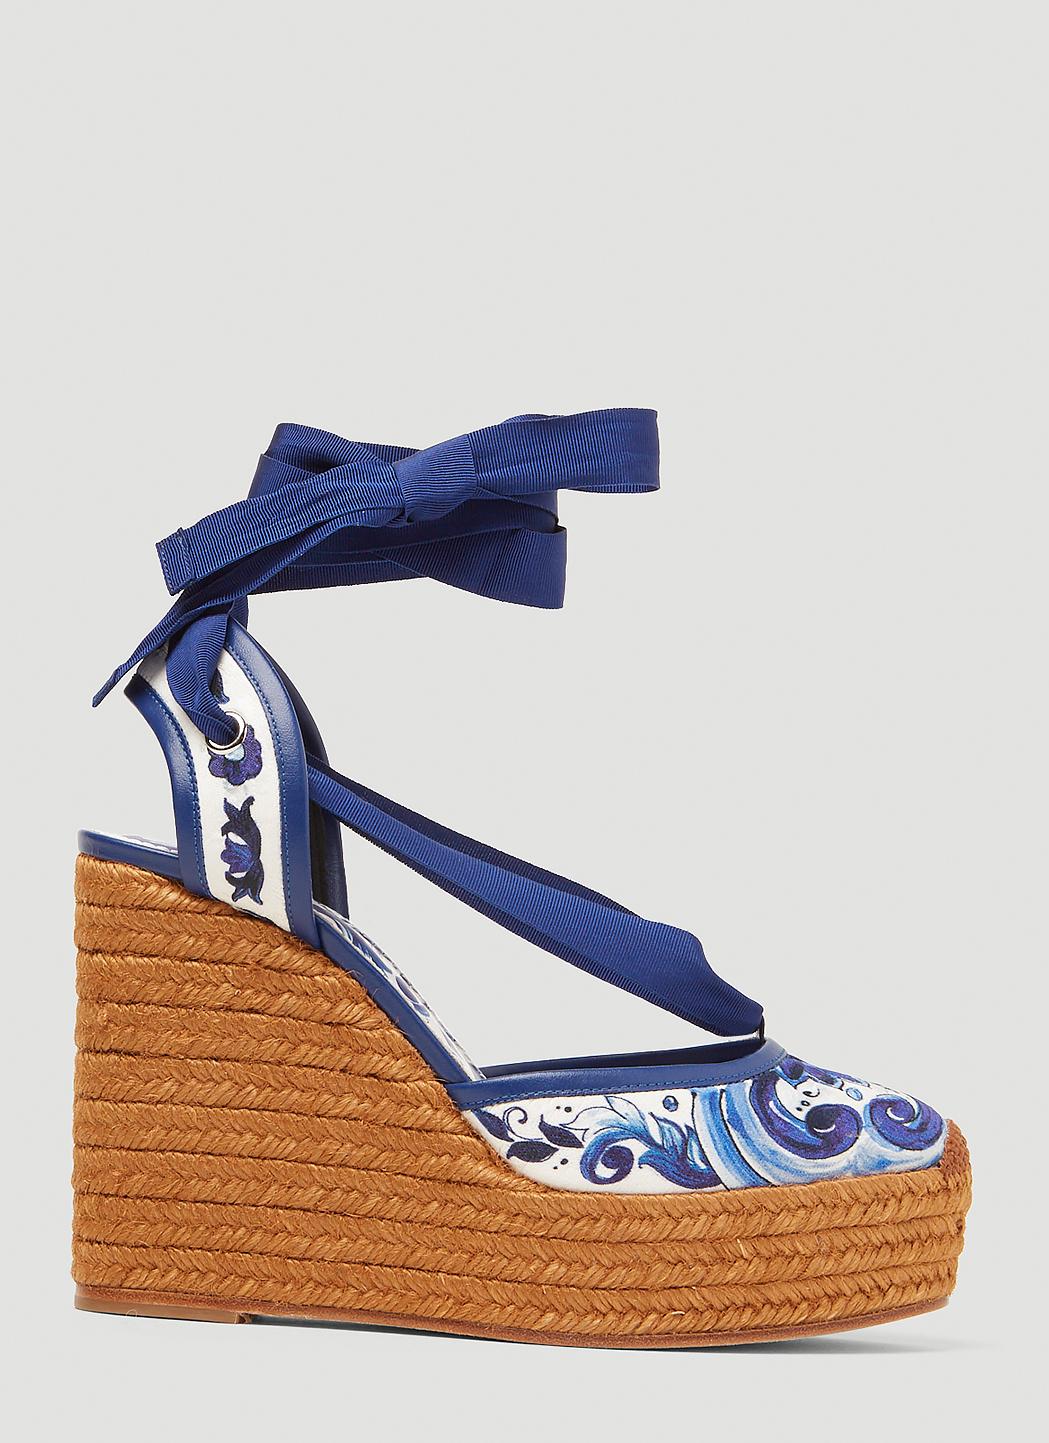 Dolce & Gabbana Majolica Print Espadrille Wedges in Blue | Lyst